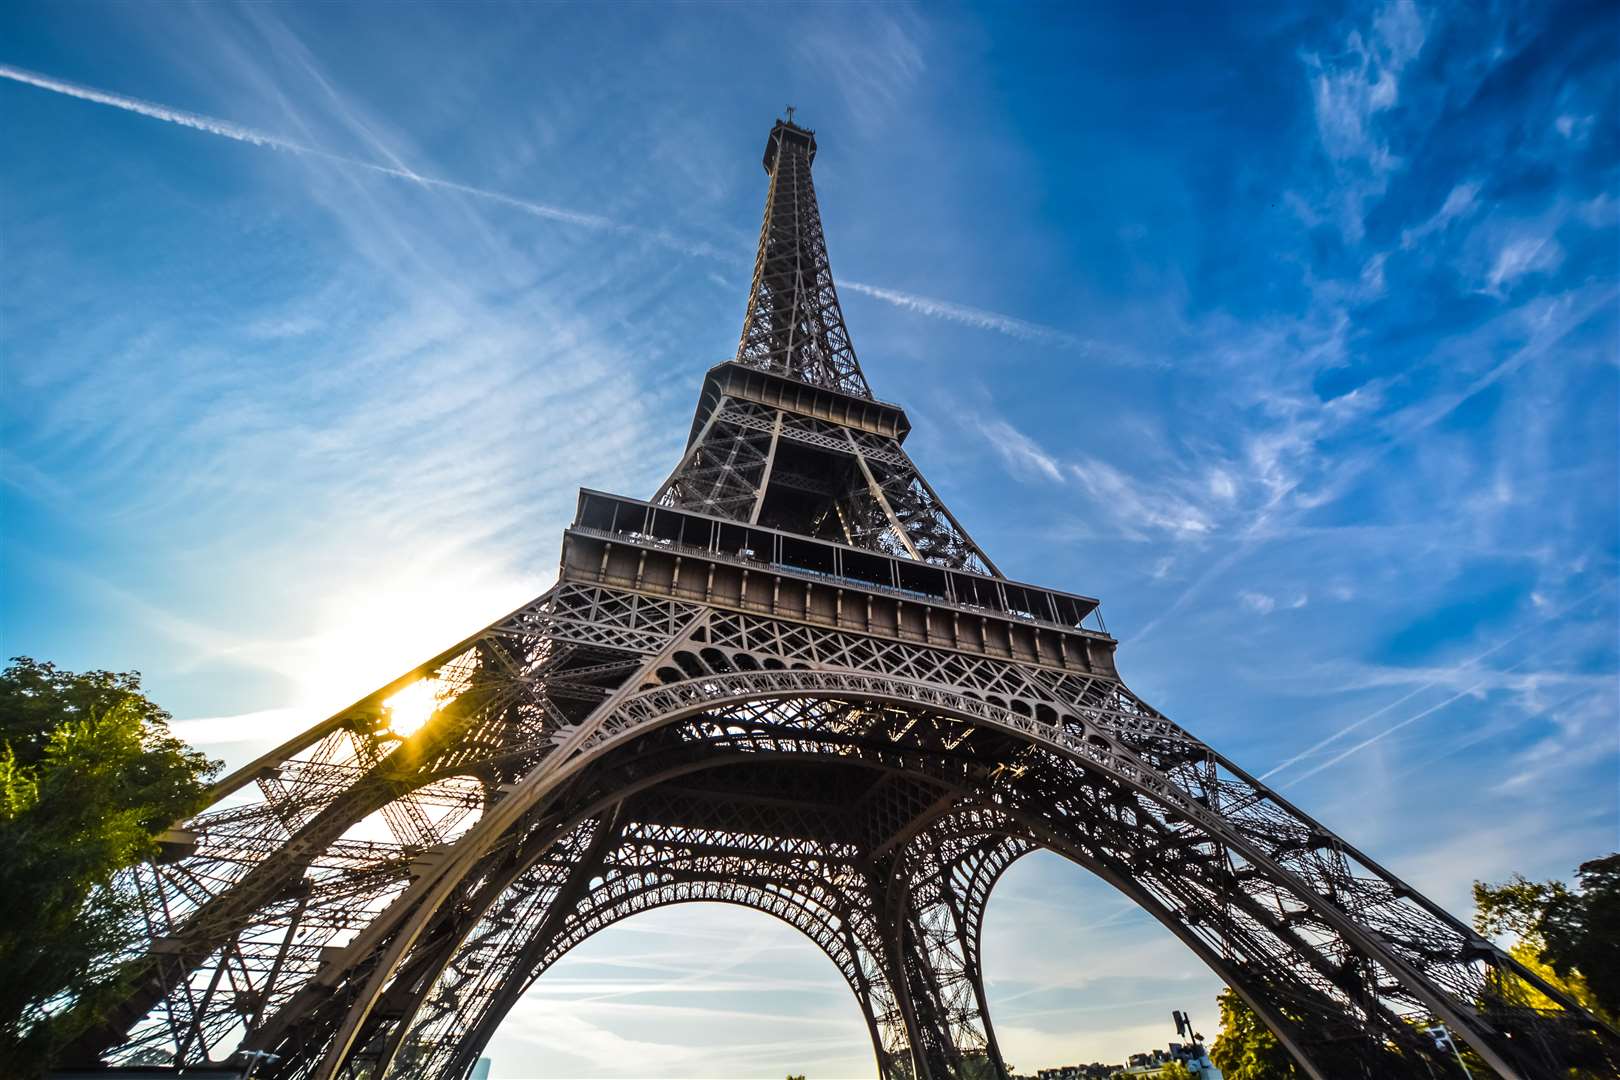 Filip Cegar will be climbing the Eiffel Tower in Paris (Alamy/PA)